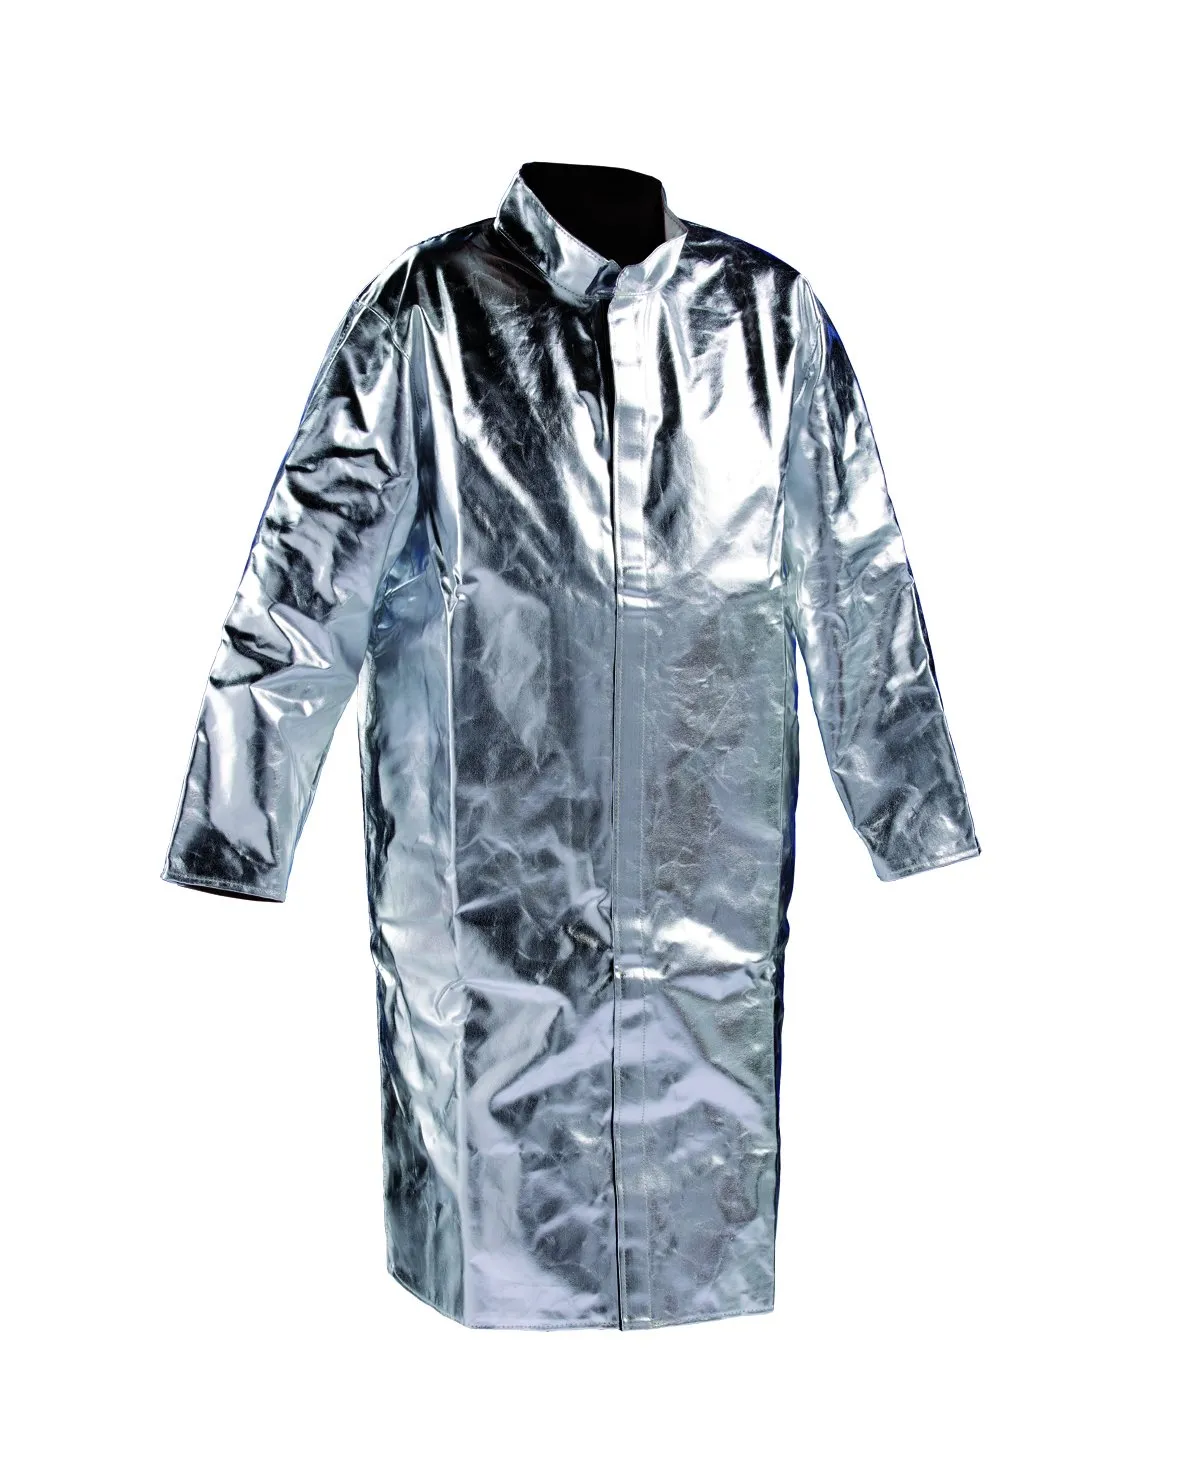 Ochranný kabát JUTEC se svislým rovným zapínáním  z preox-aramidové tkaniny s AL povlakem pro horké provozy